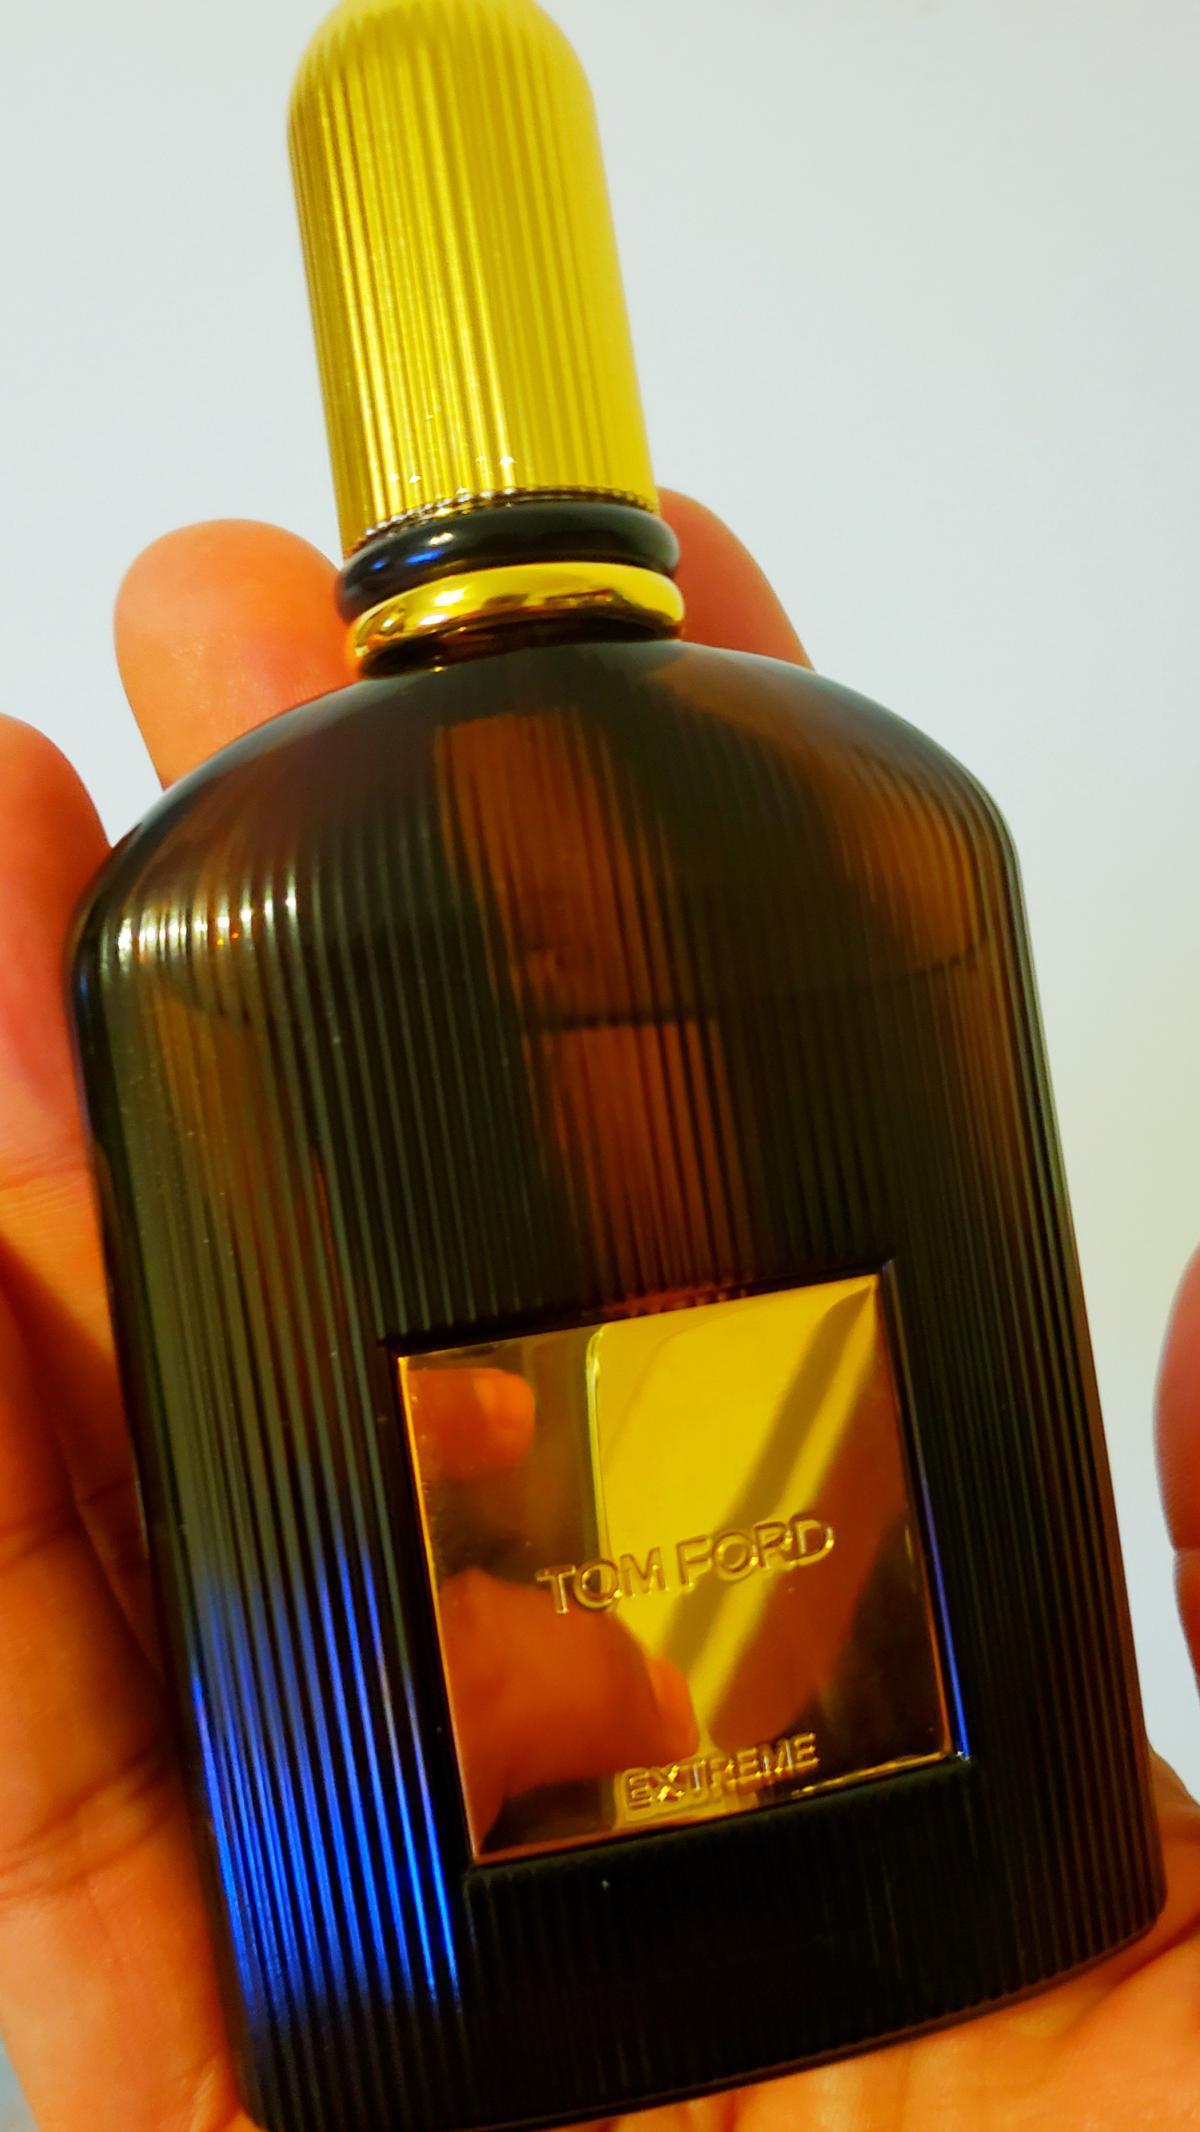 Tom Ford for Men Extreme Tom Ford cologne - a fragrance for men 2007